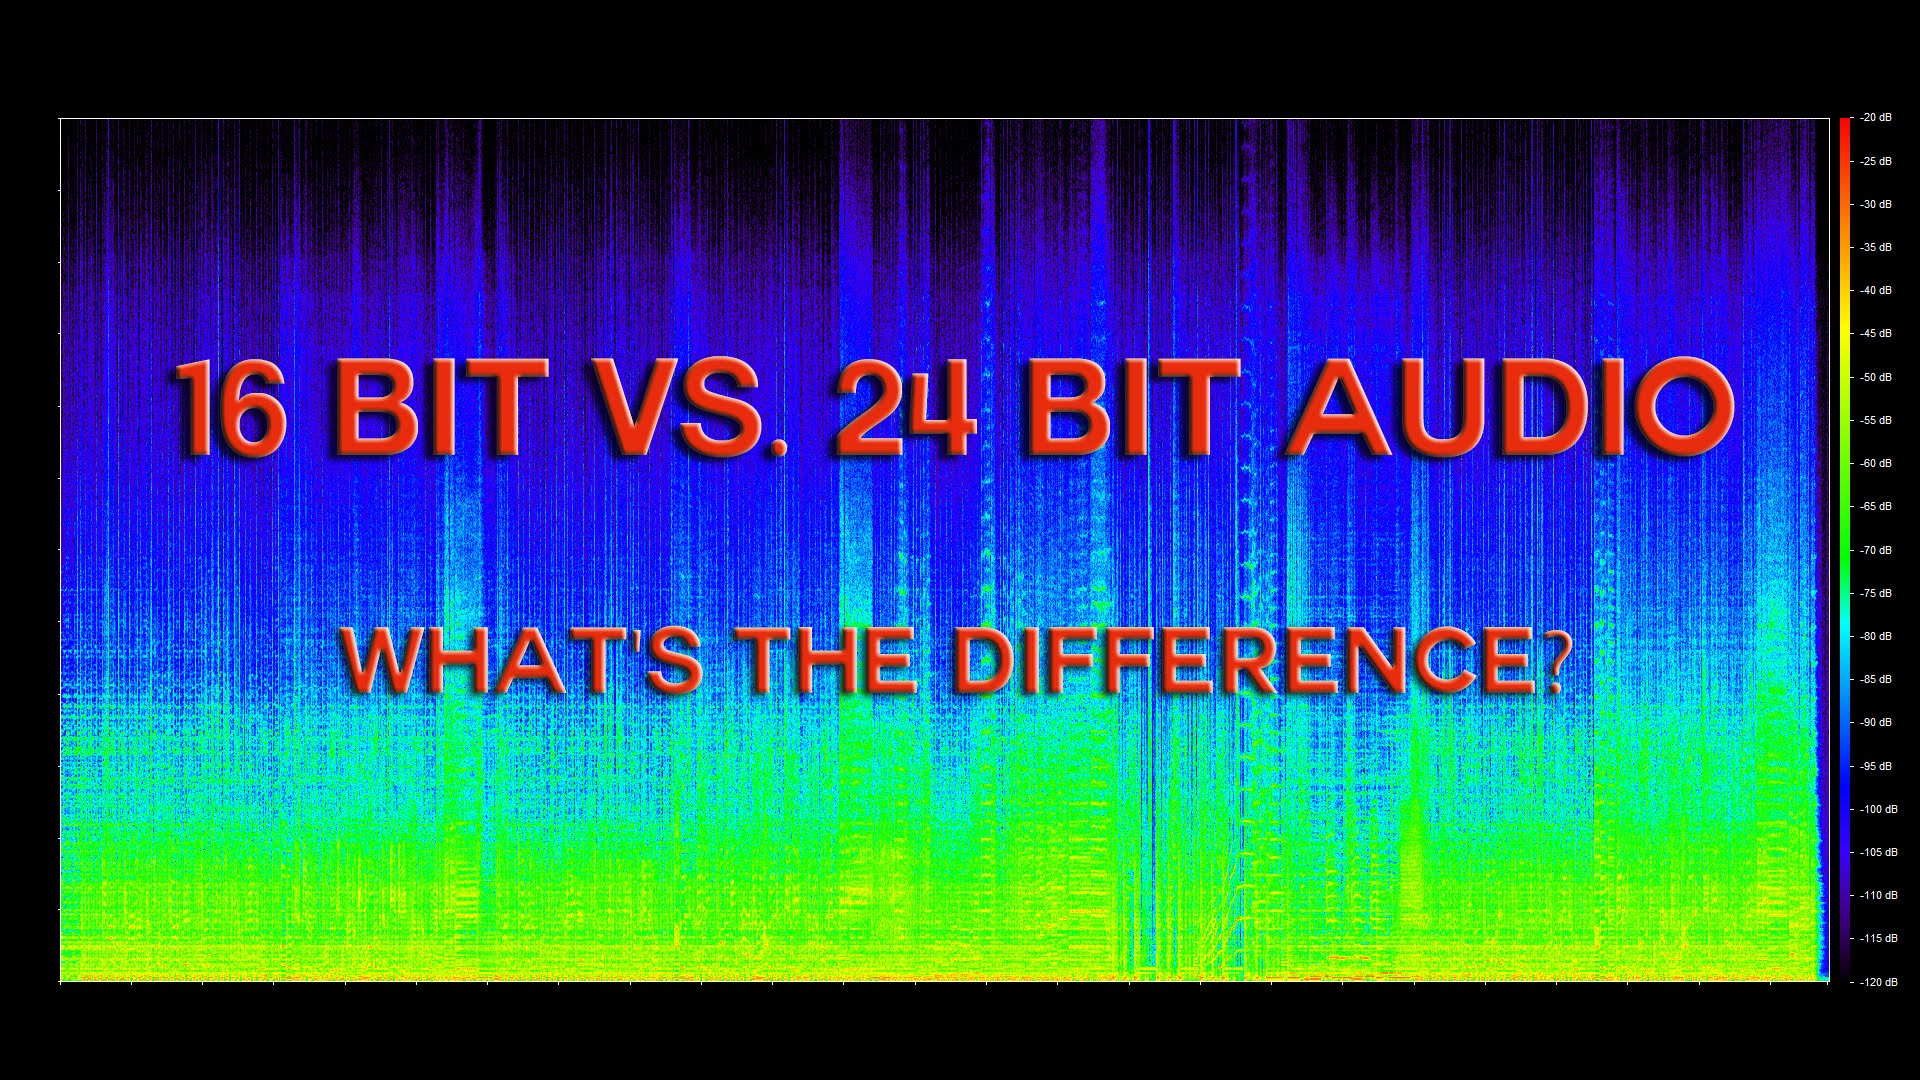 16 бит 24 бит звук. Изображение 24 бит. Бит аудио. 24bit vs 32bit Audio. 16 Бит звук.